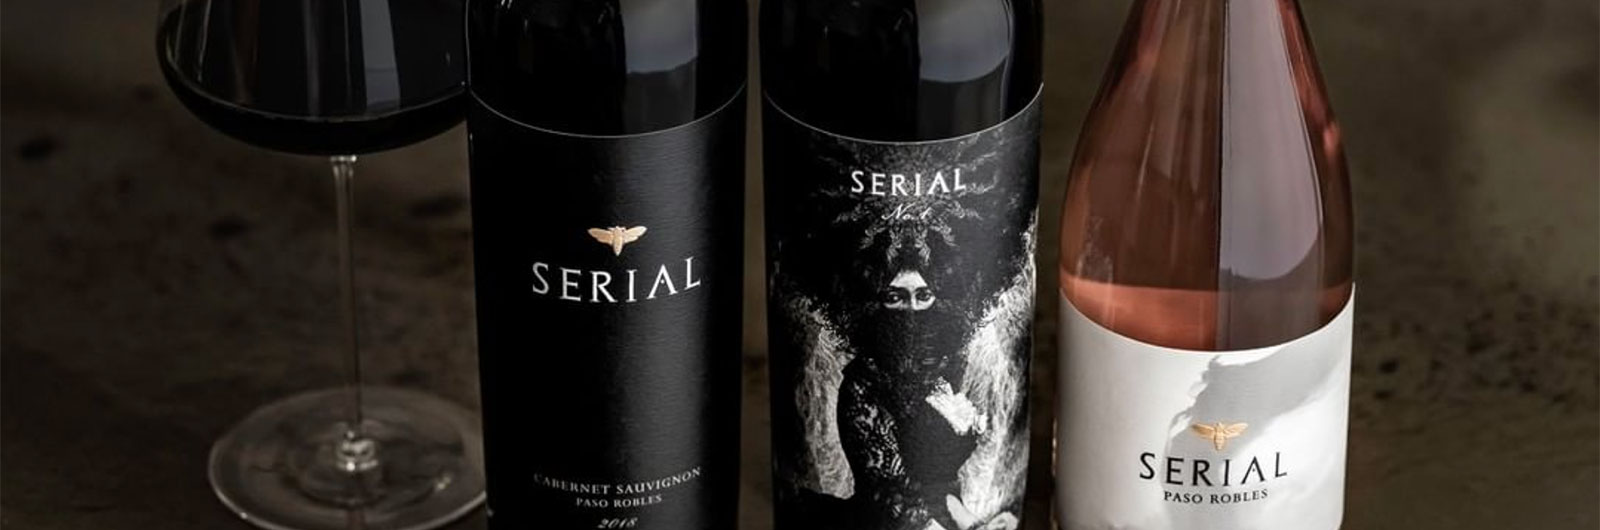 Serial Wine Bottles